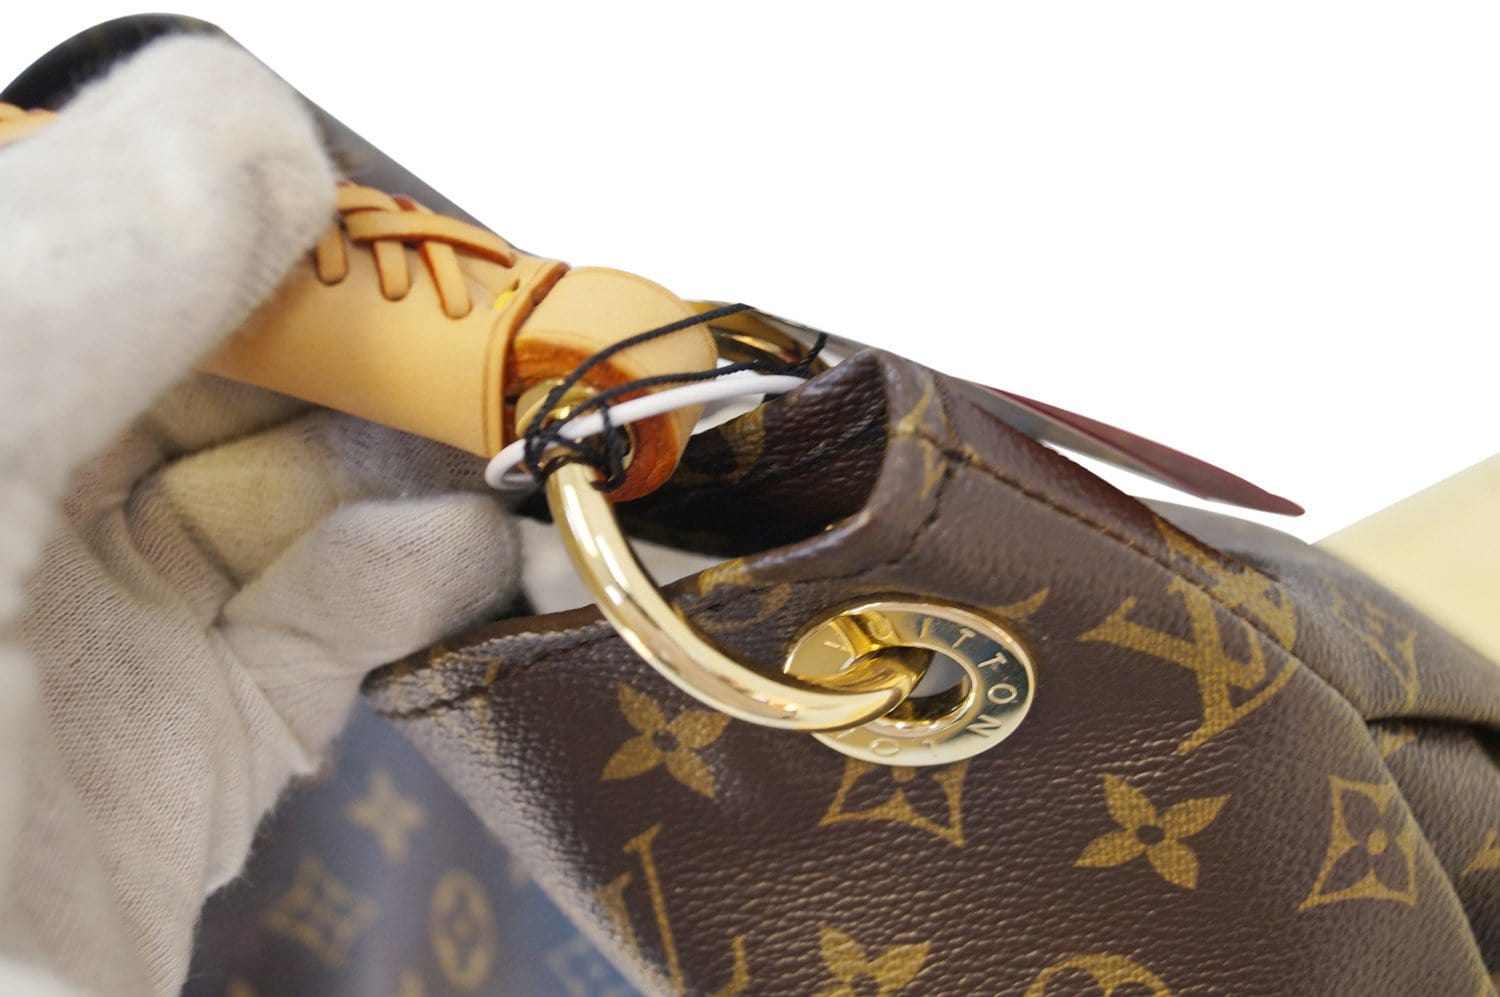 Authentic Louis Vuitton Artsy GM Monogram Tote Hobo Bag Purse EUC